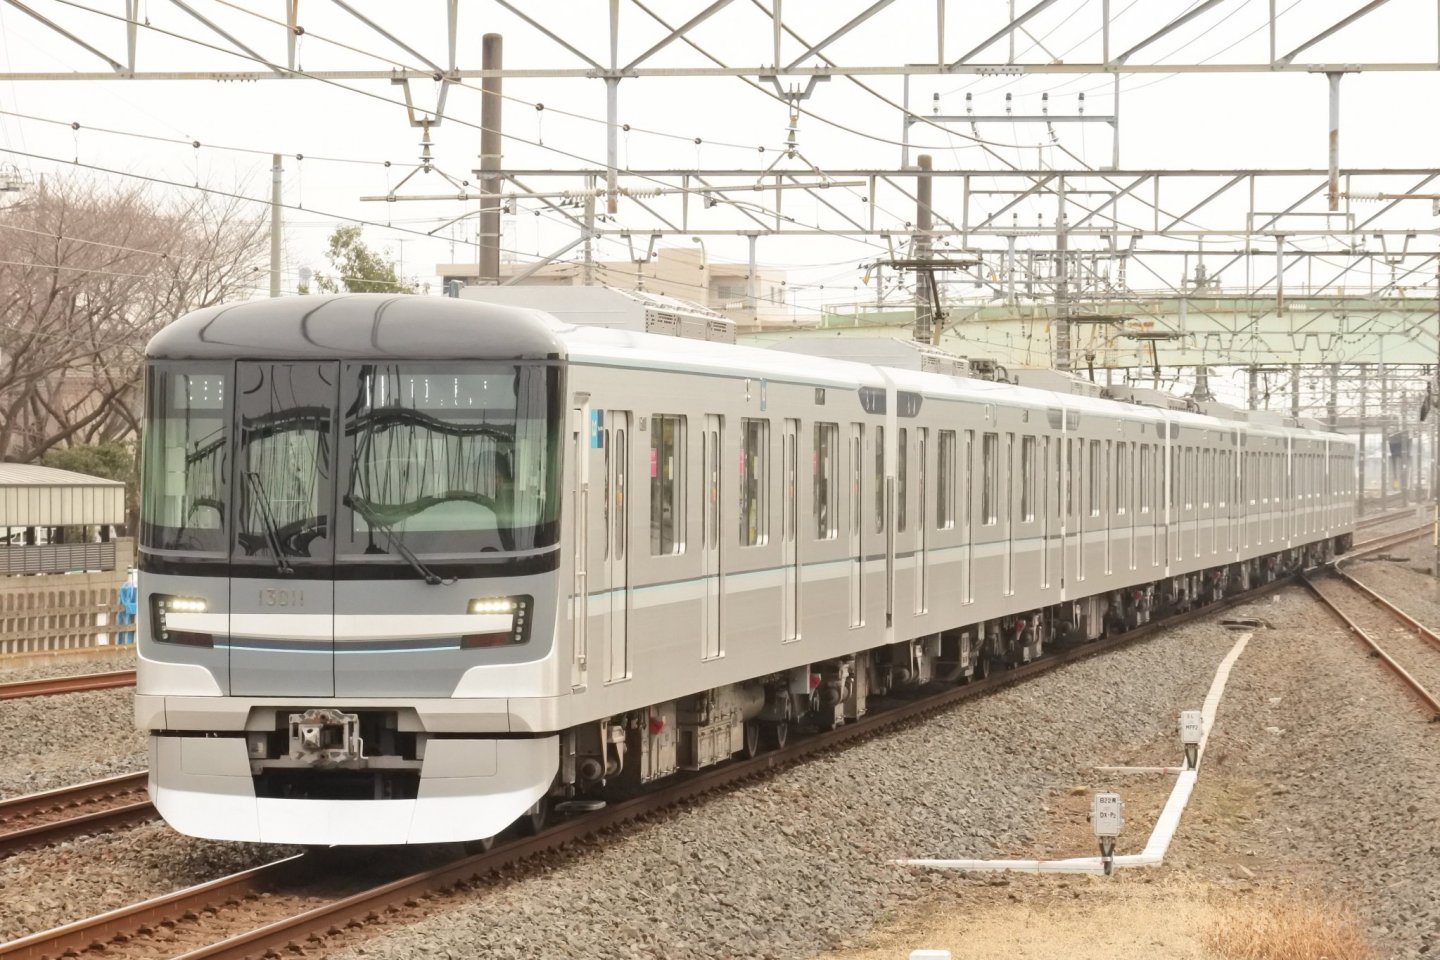 The new Hibiya Line train